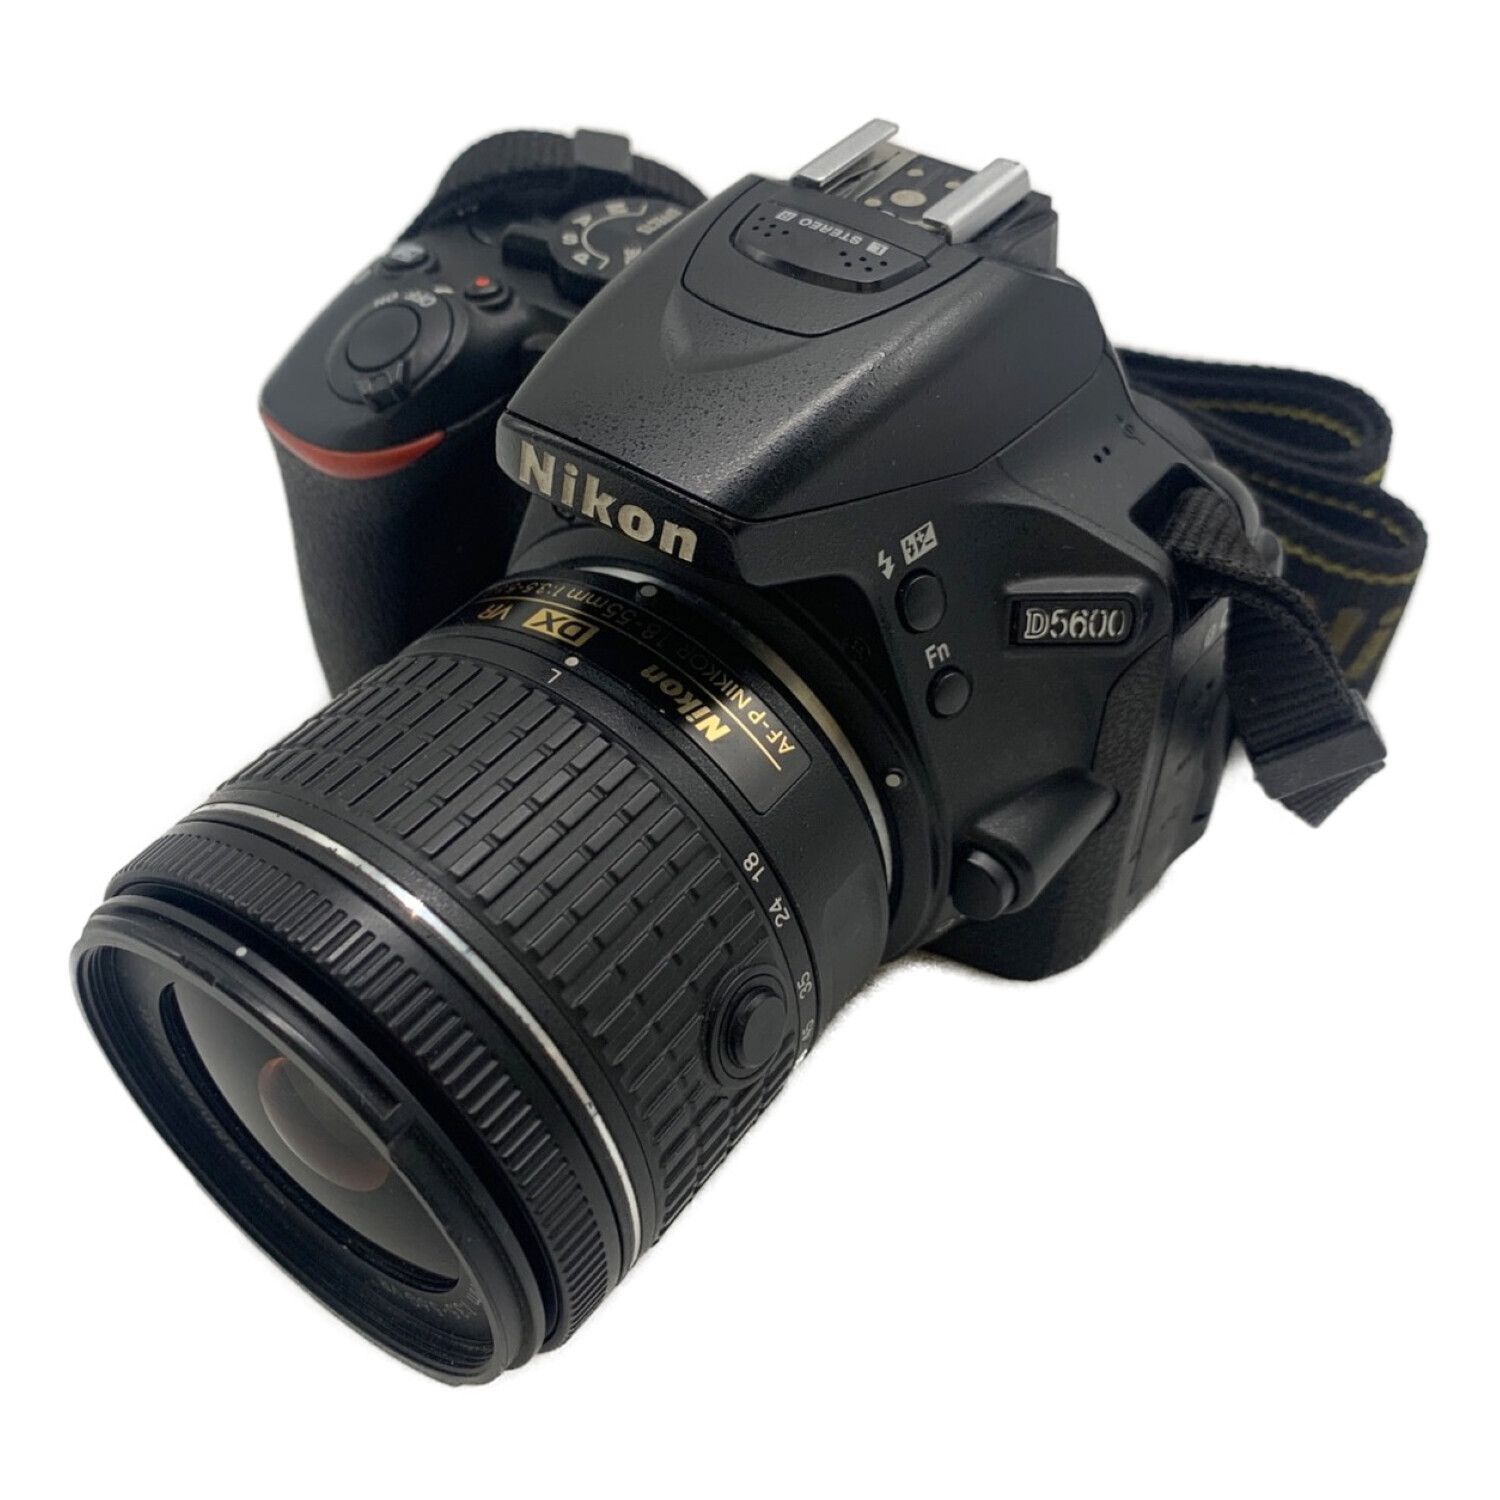 Nikon (ニコン) デジタル一眼レフカメラ D5600 2416万画素数 APS-C